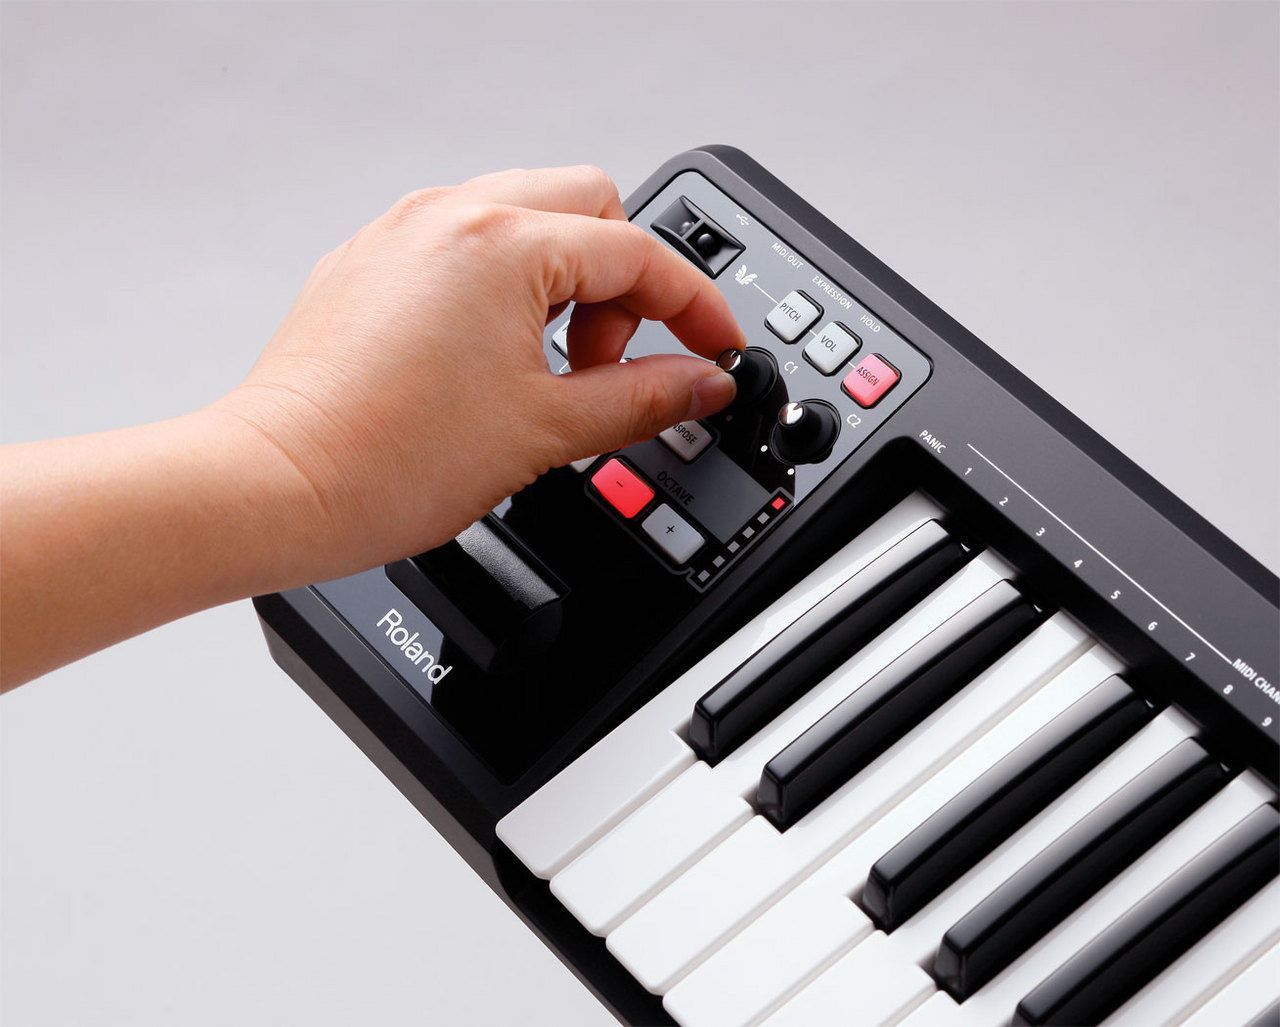 Roland A-49 (ブラック) MIDIキーボード・コントローラー 49鍵盤A49